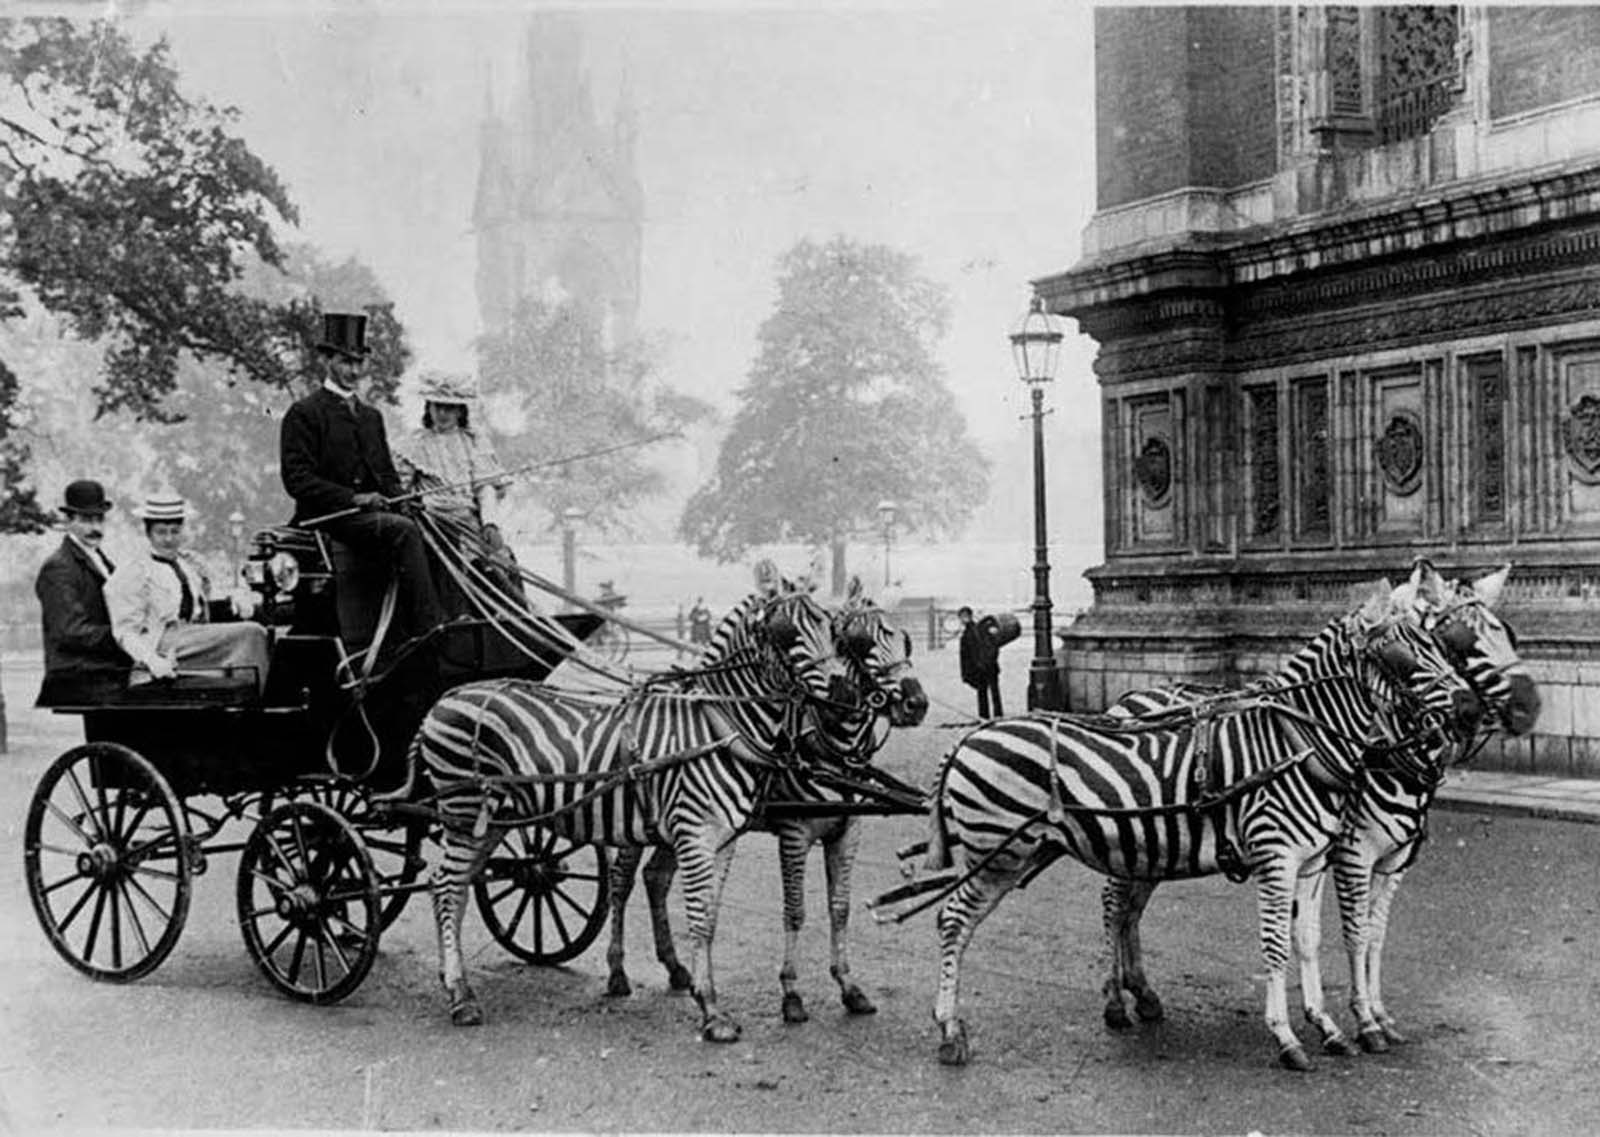 riding zebras photographs